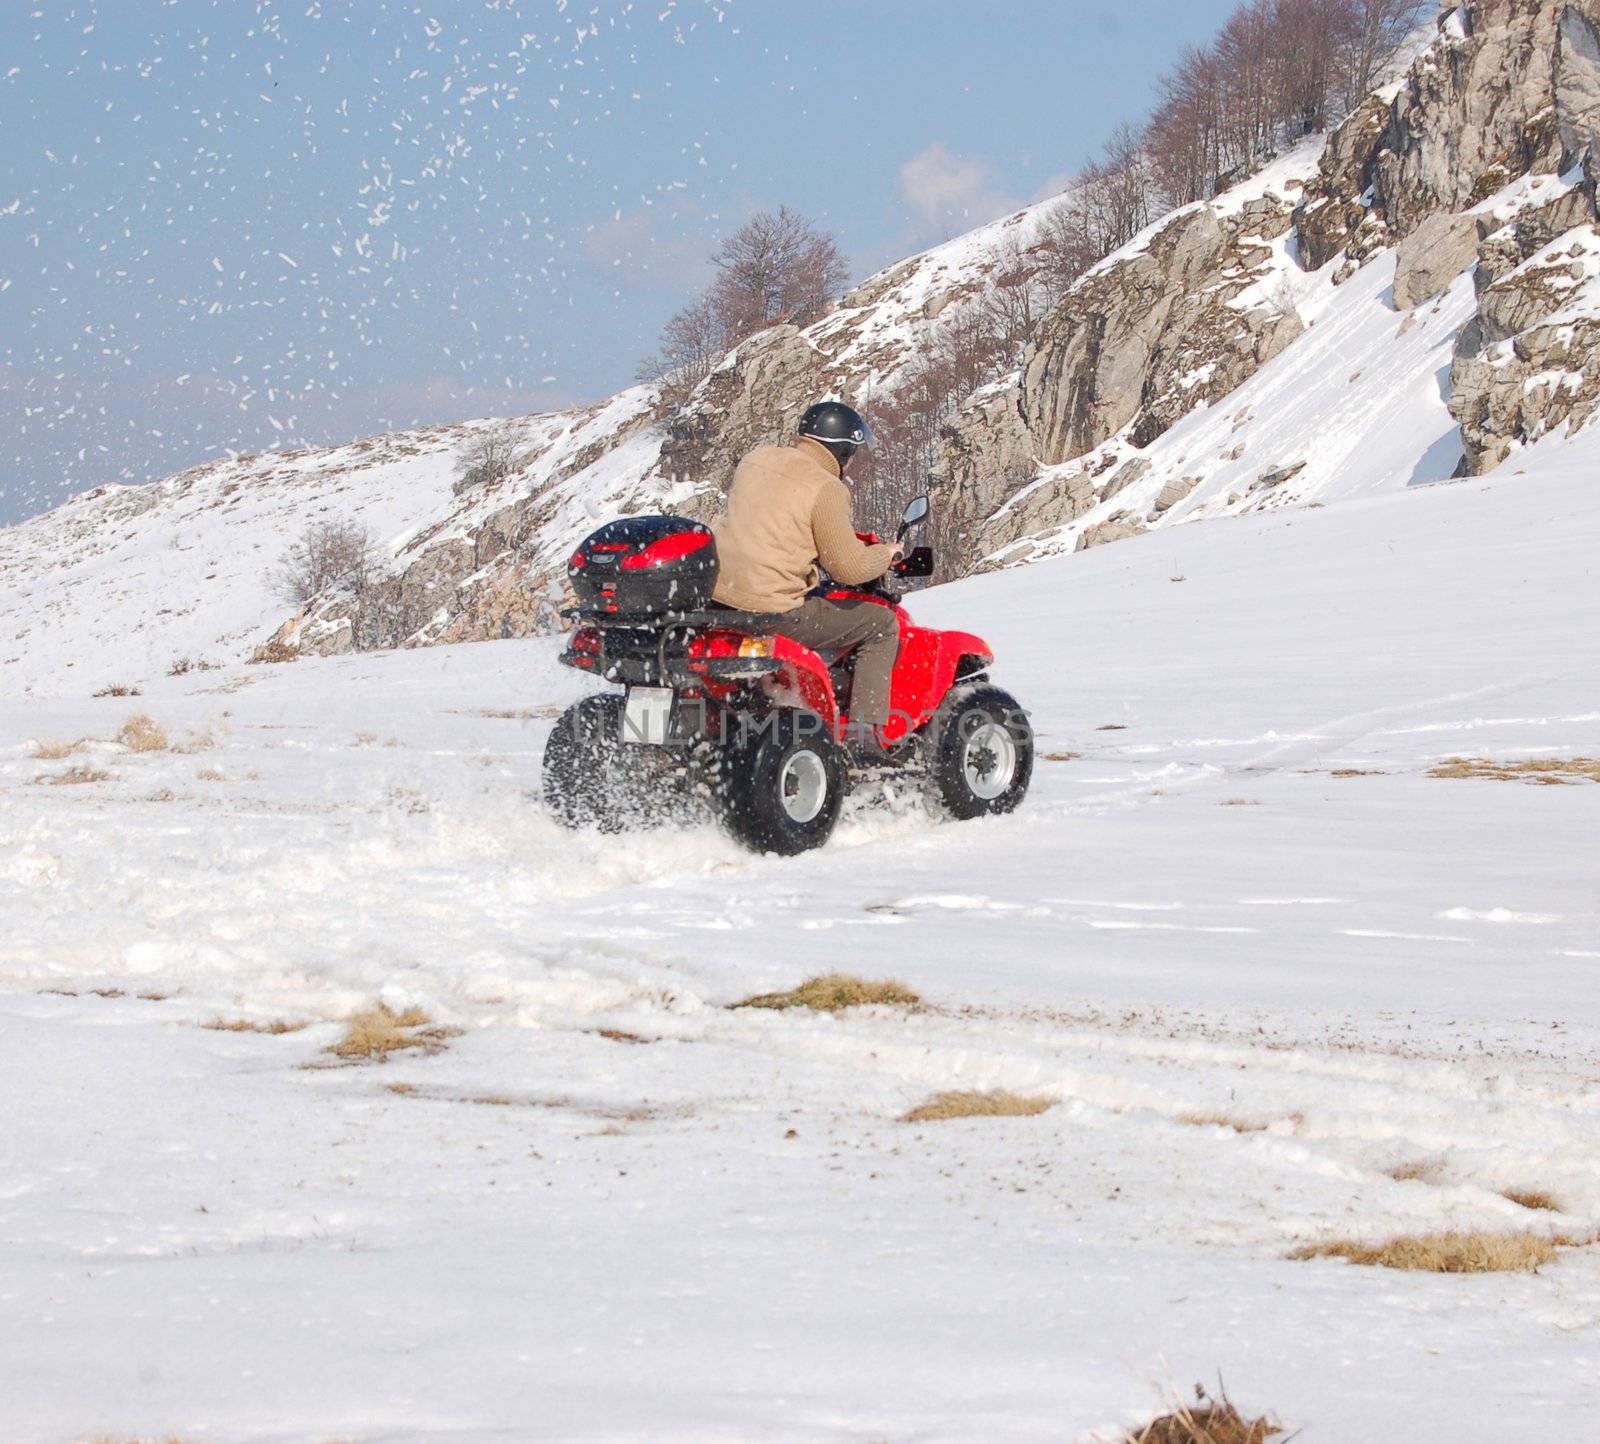 Man riding quad in mountain snow